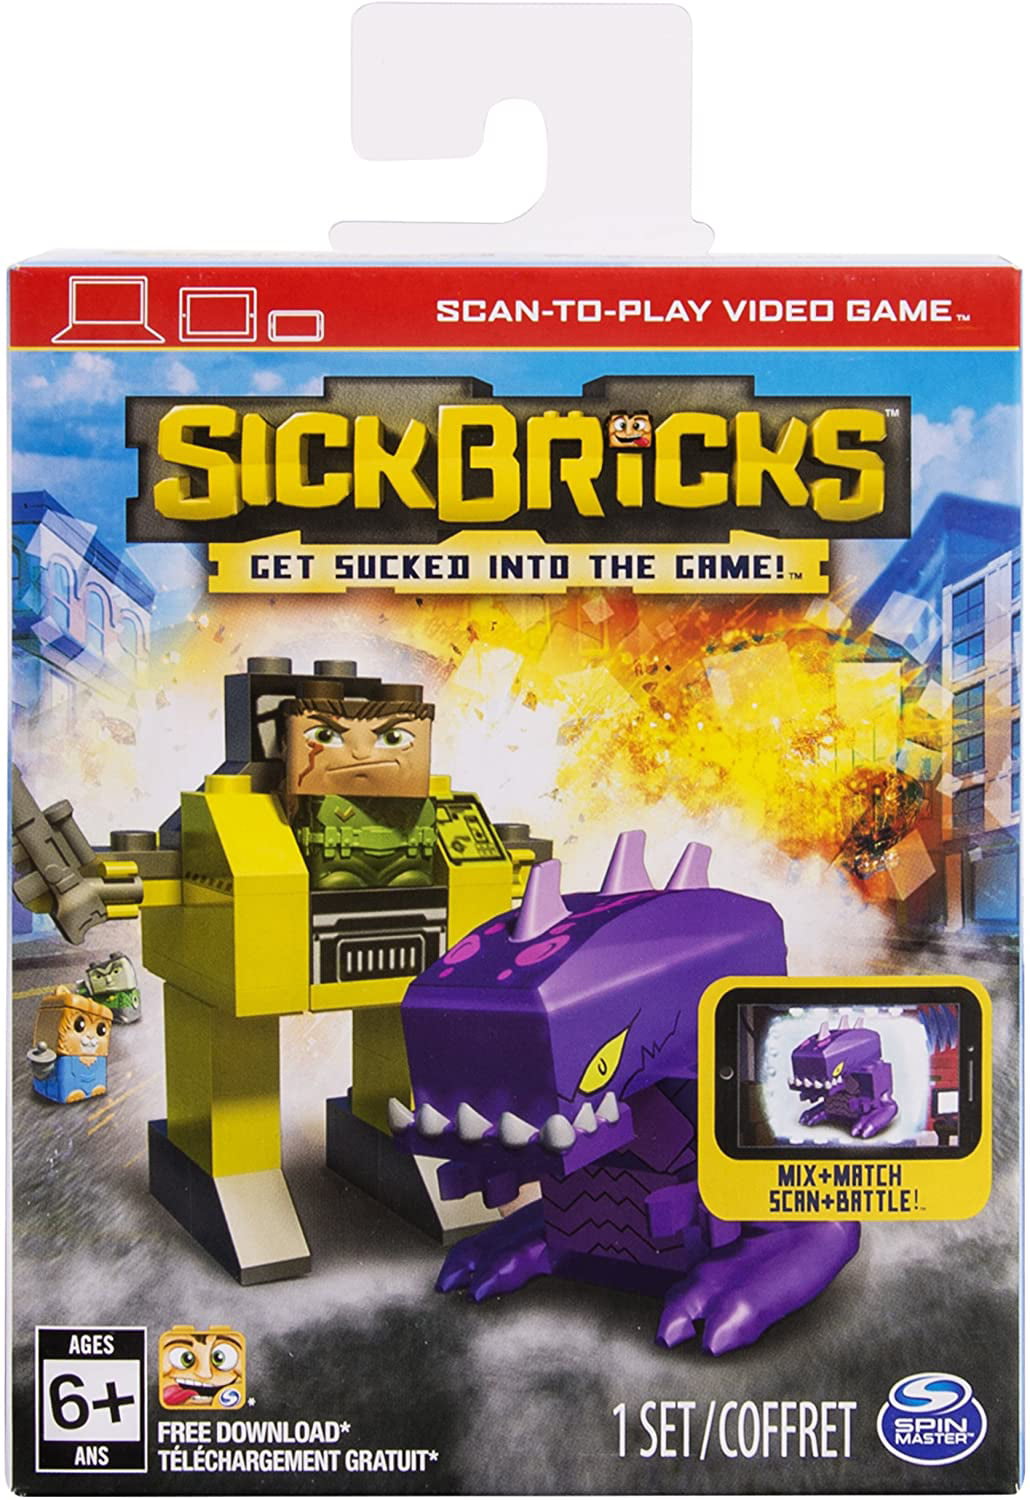 Sickbricks Scan to play video game 